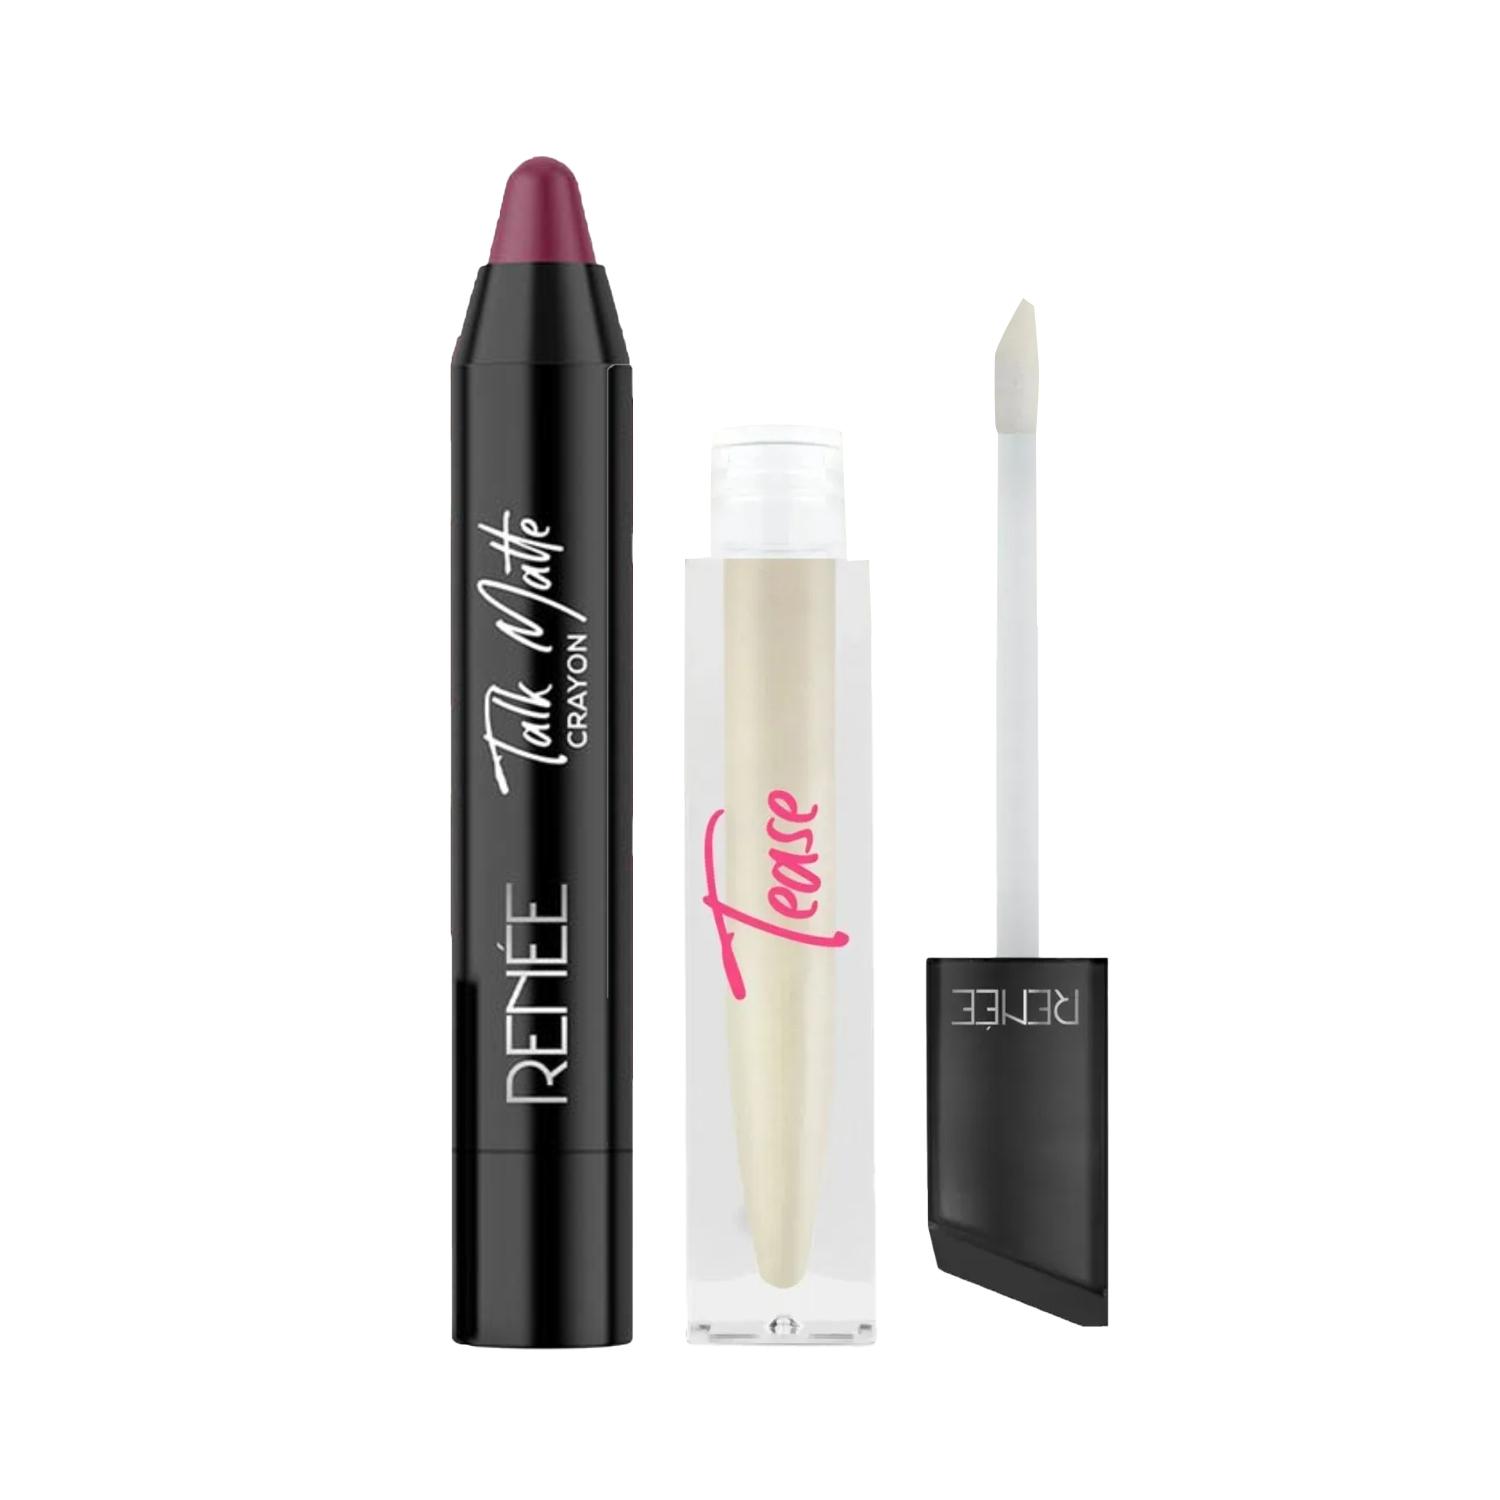 RENEE Color Crush Lip Duo for Every Mood Combo - Lipstick + Lip Plumper